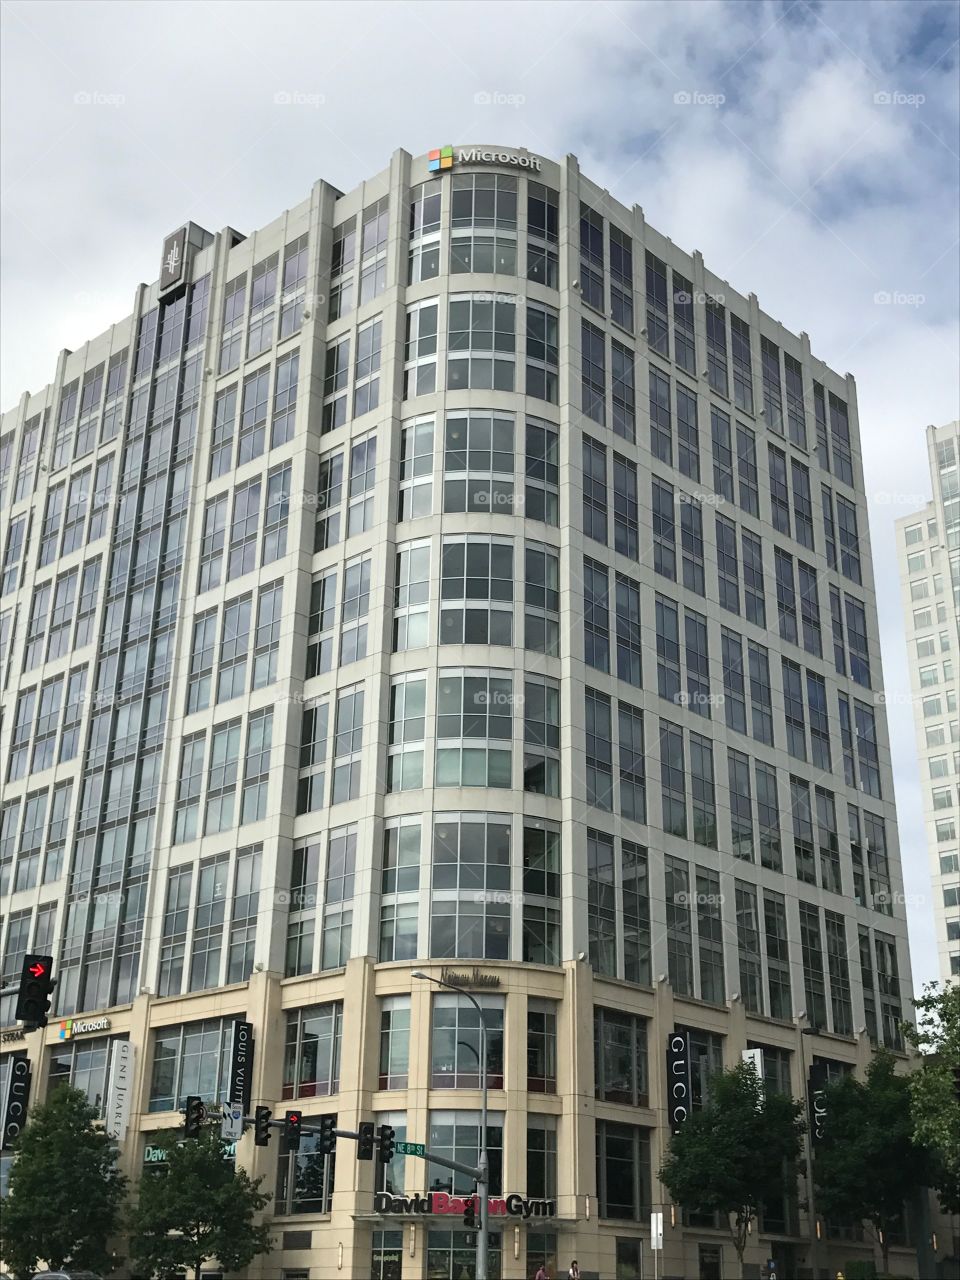 Microsoft building in downtown Bellevue Washington